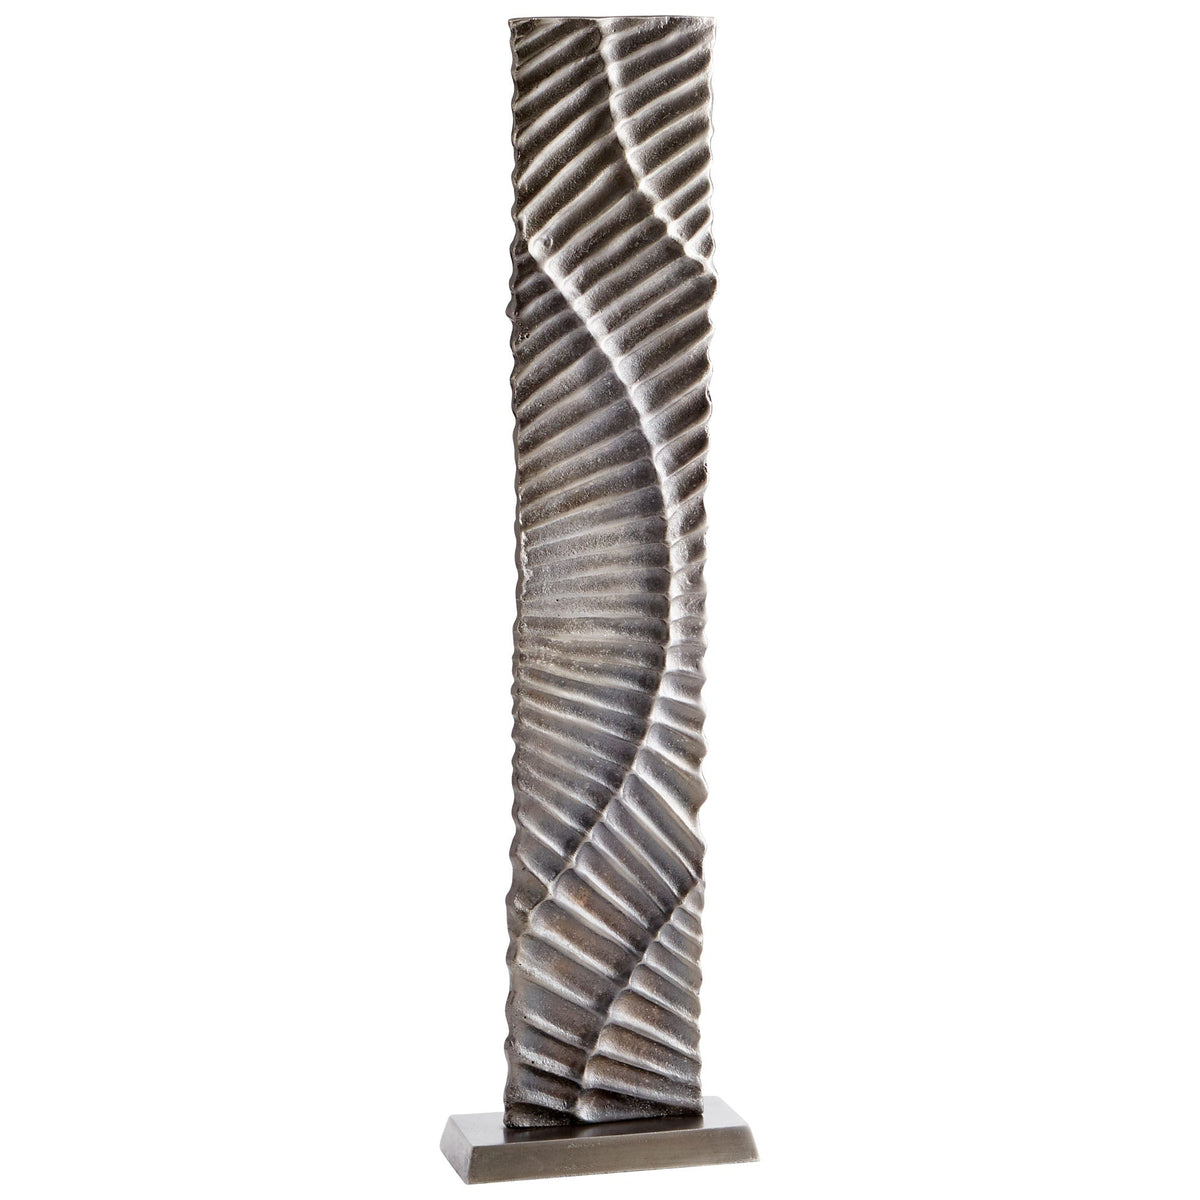 Barbican Sculpture|Silver by Cyan